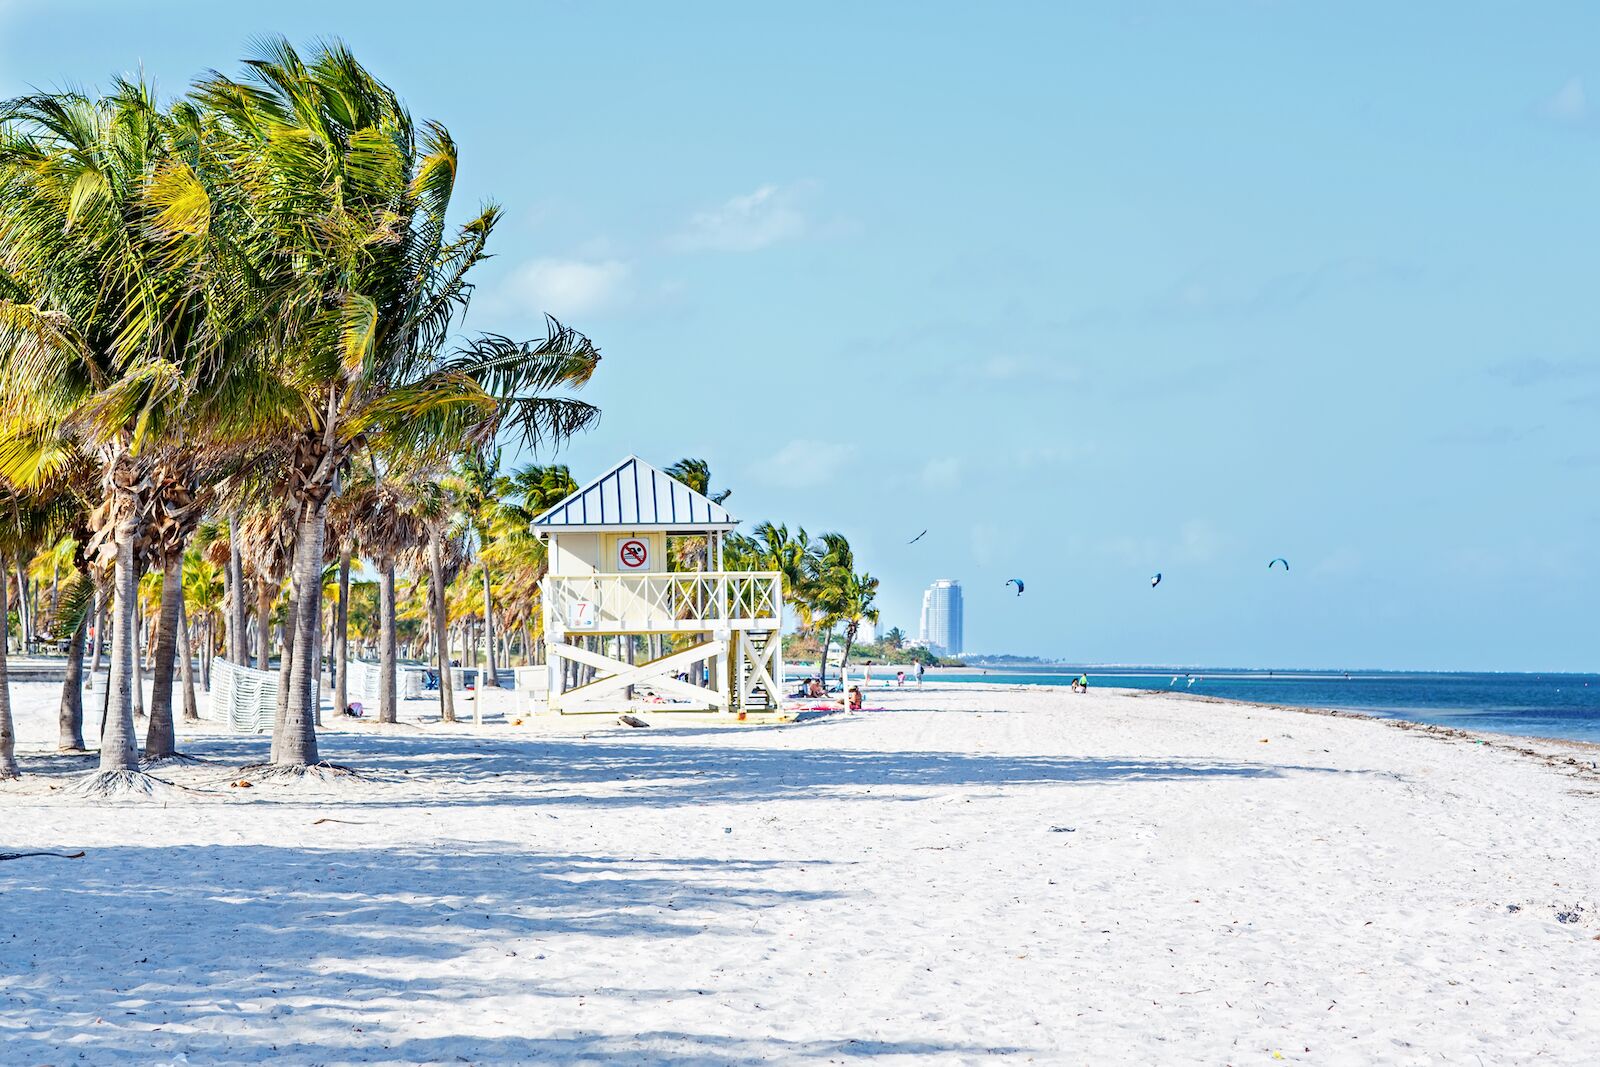 Beautiful Crandon Park Beach located in Key Biscayne in Miami, Florida, USA